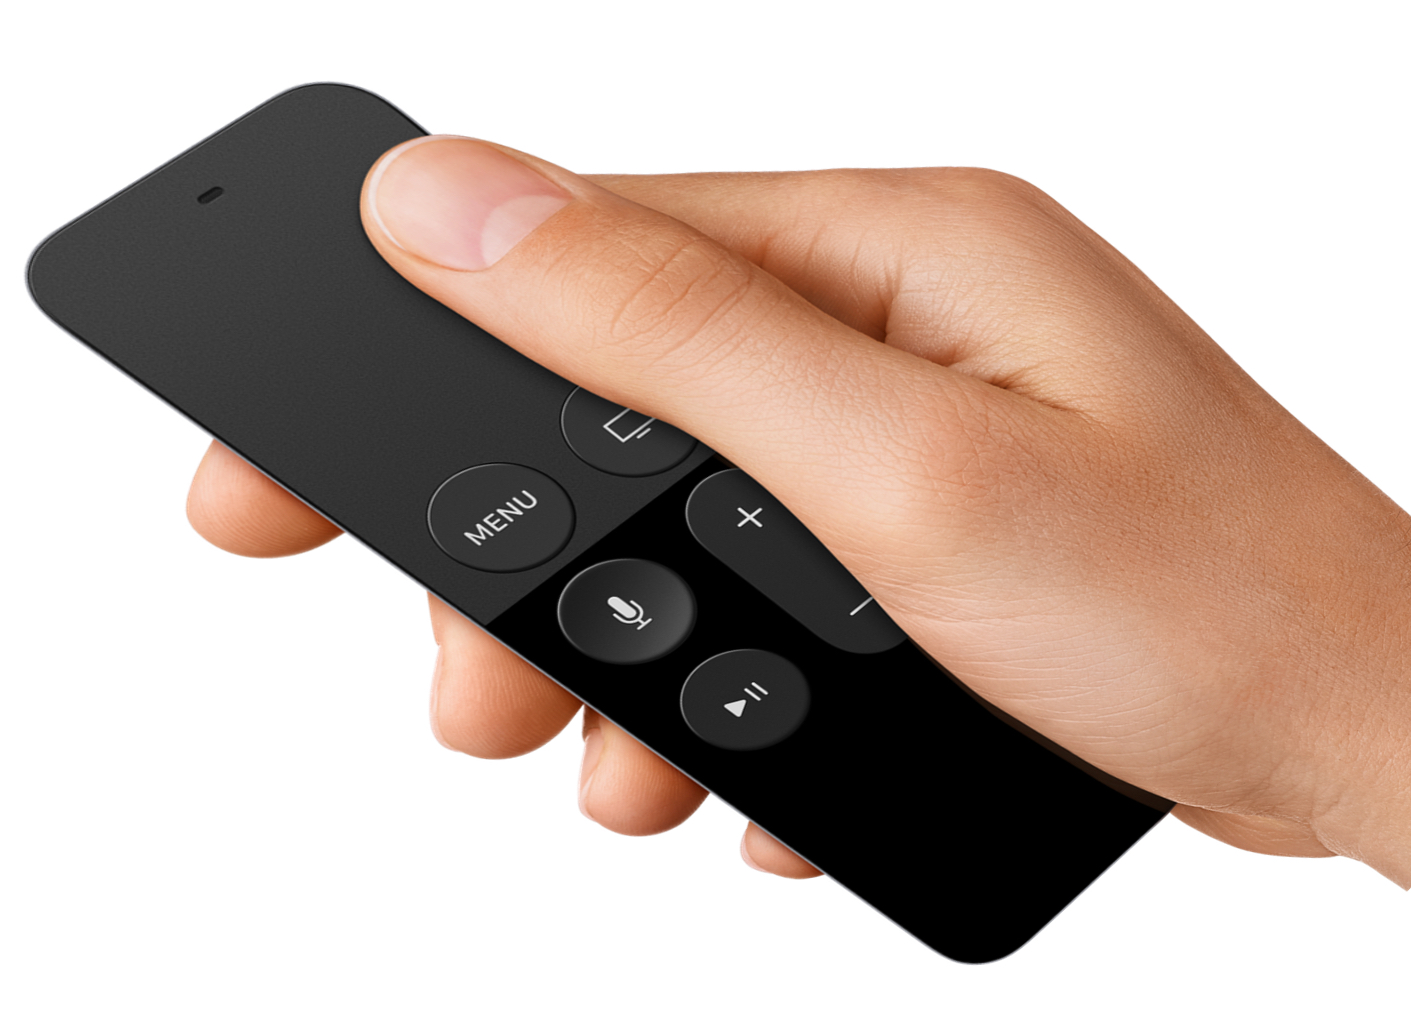 Apple TV Siri remote in hand